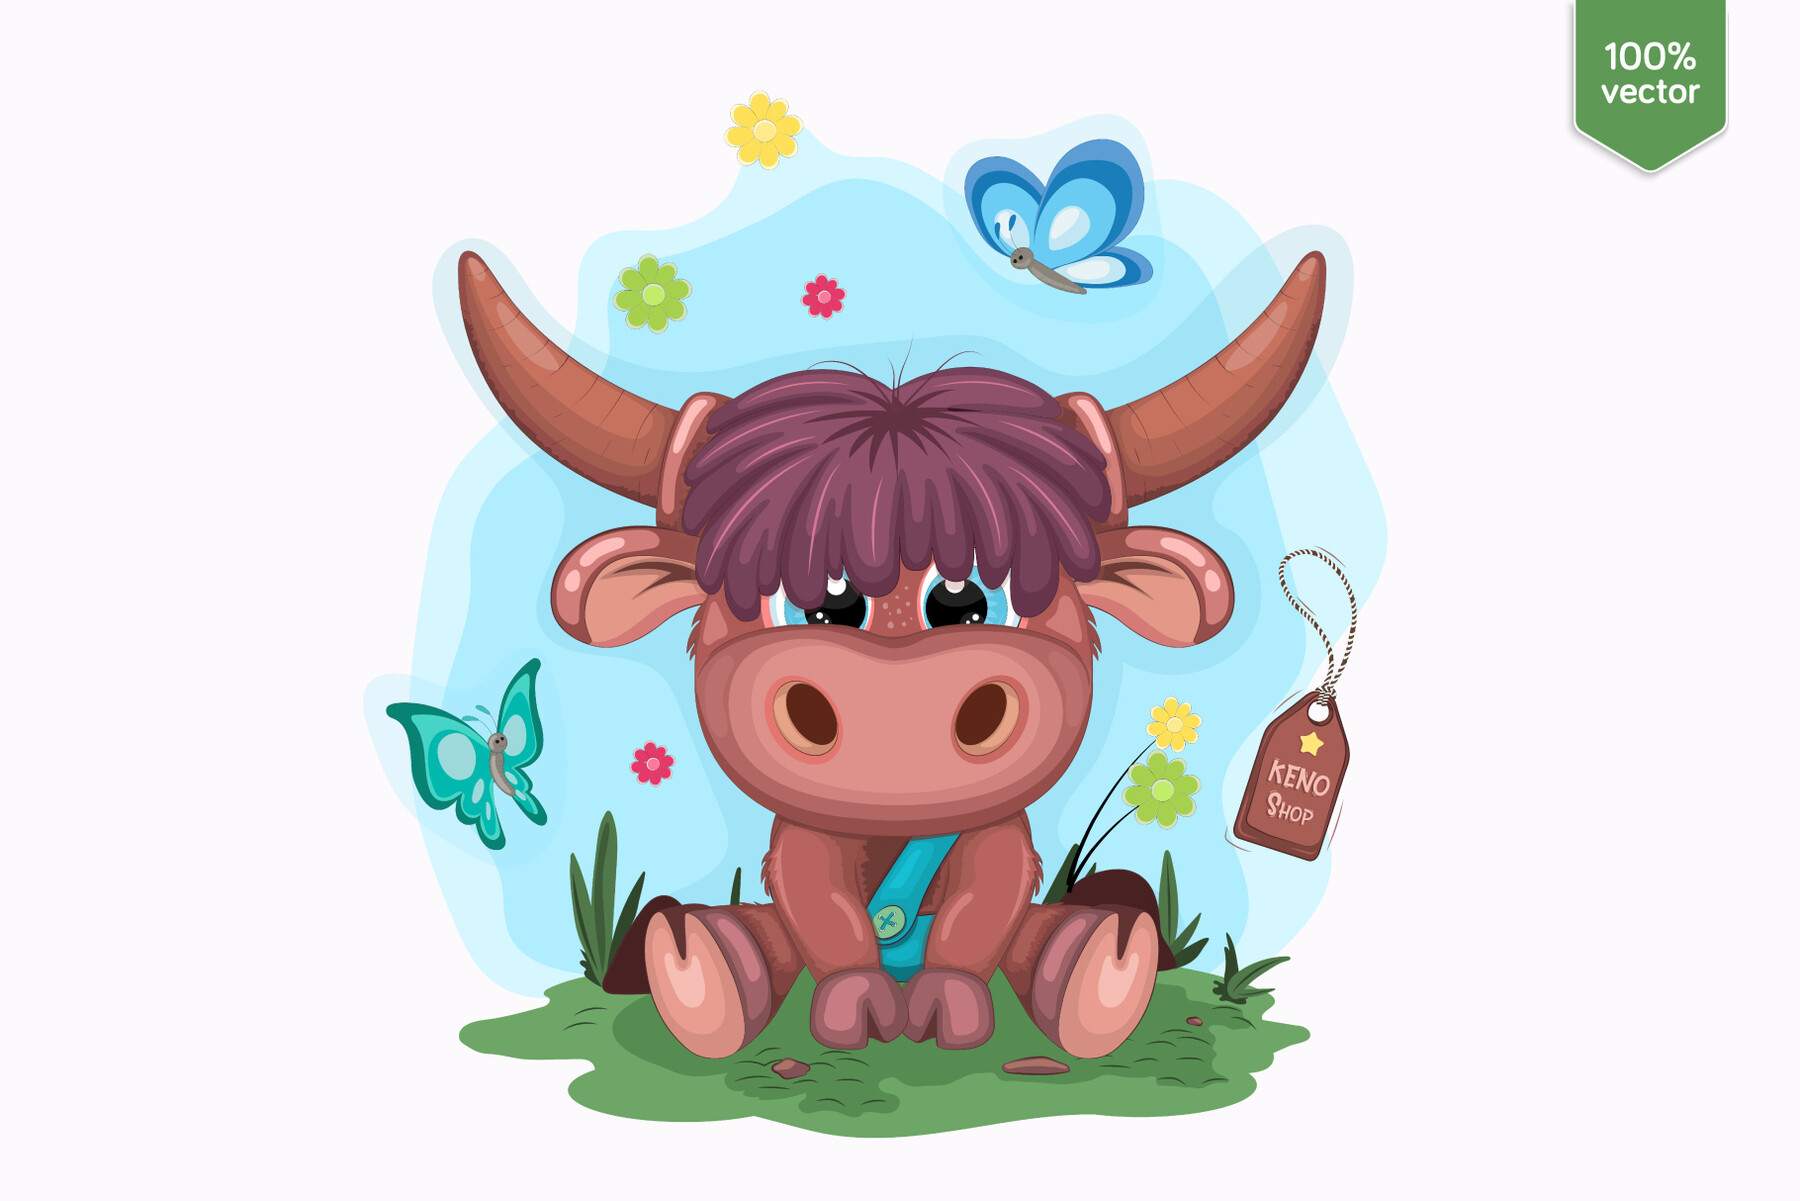 ArtStation - Cute cartoon bull. | Artworks